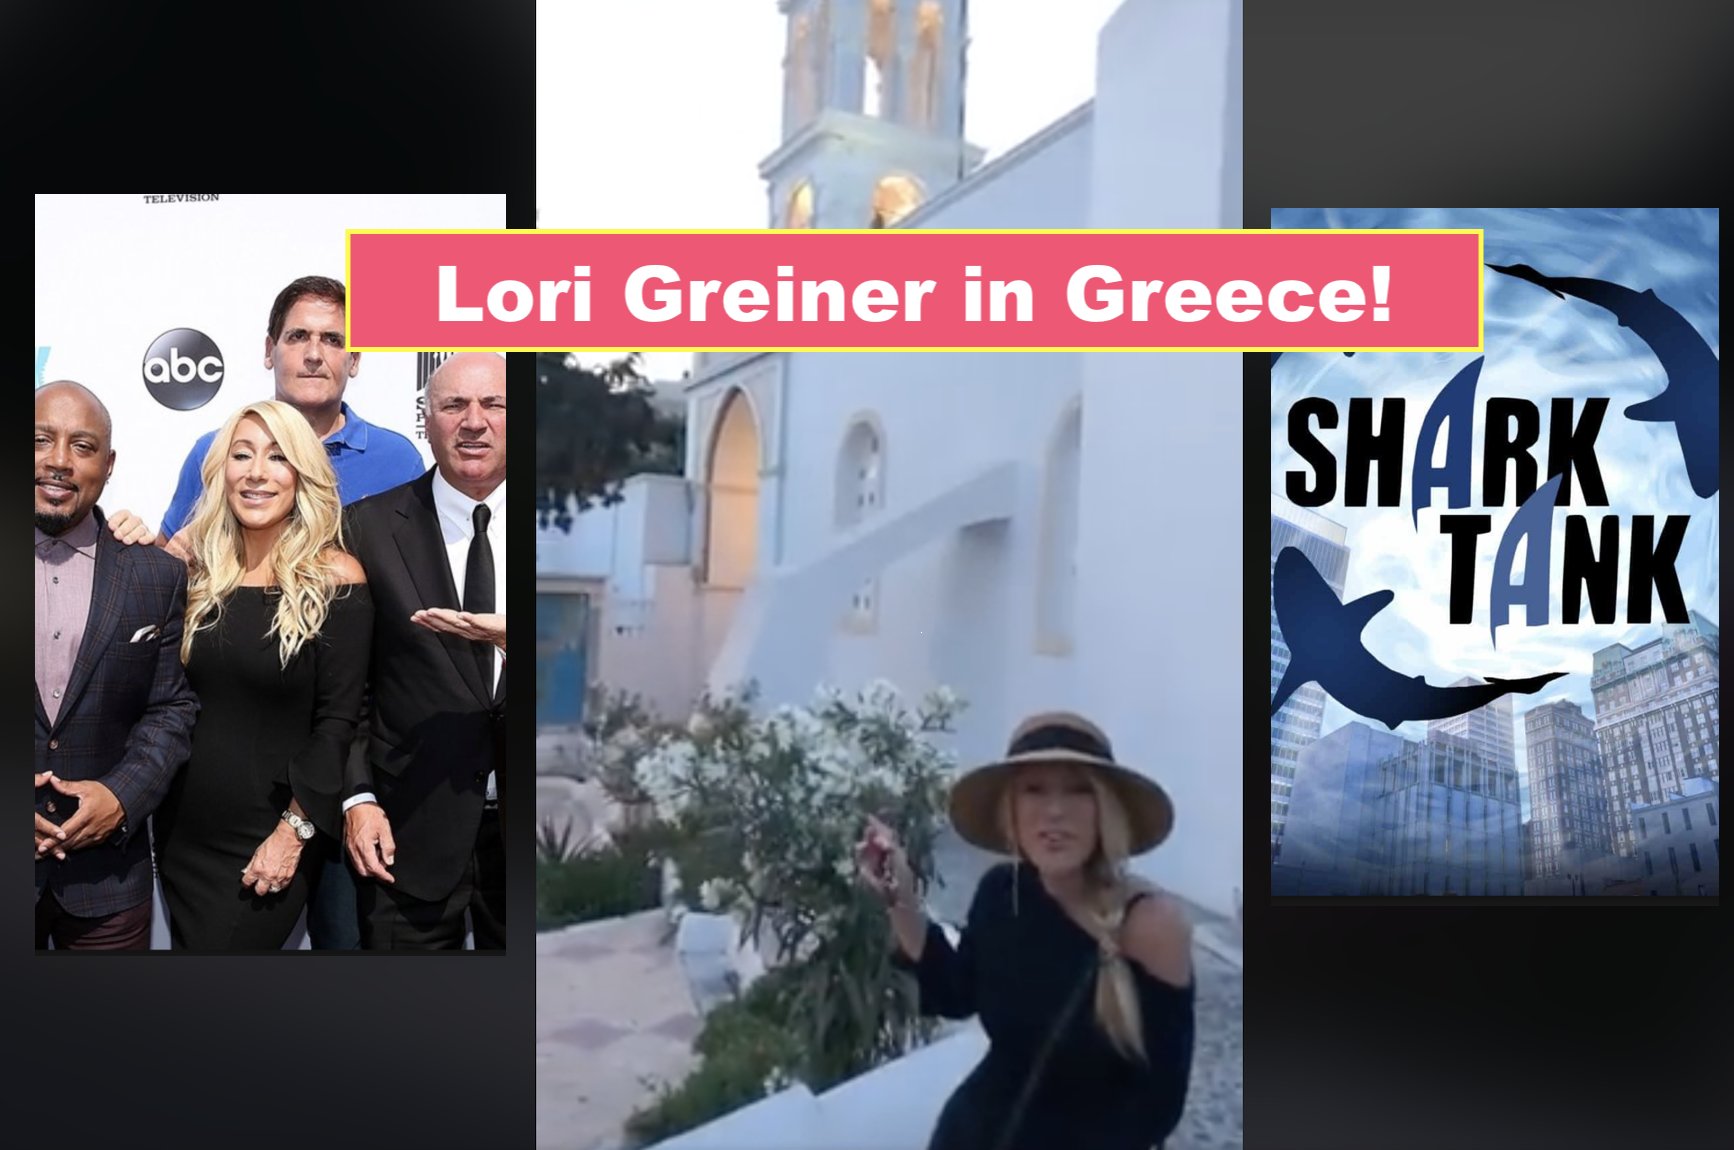 Lori Greiner from “SHARK TANK” in Santorini, Greece!